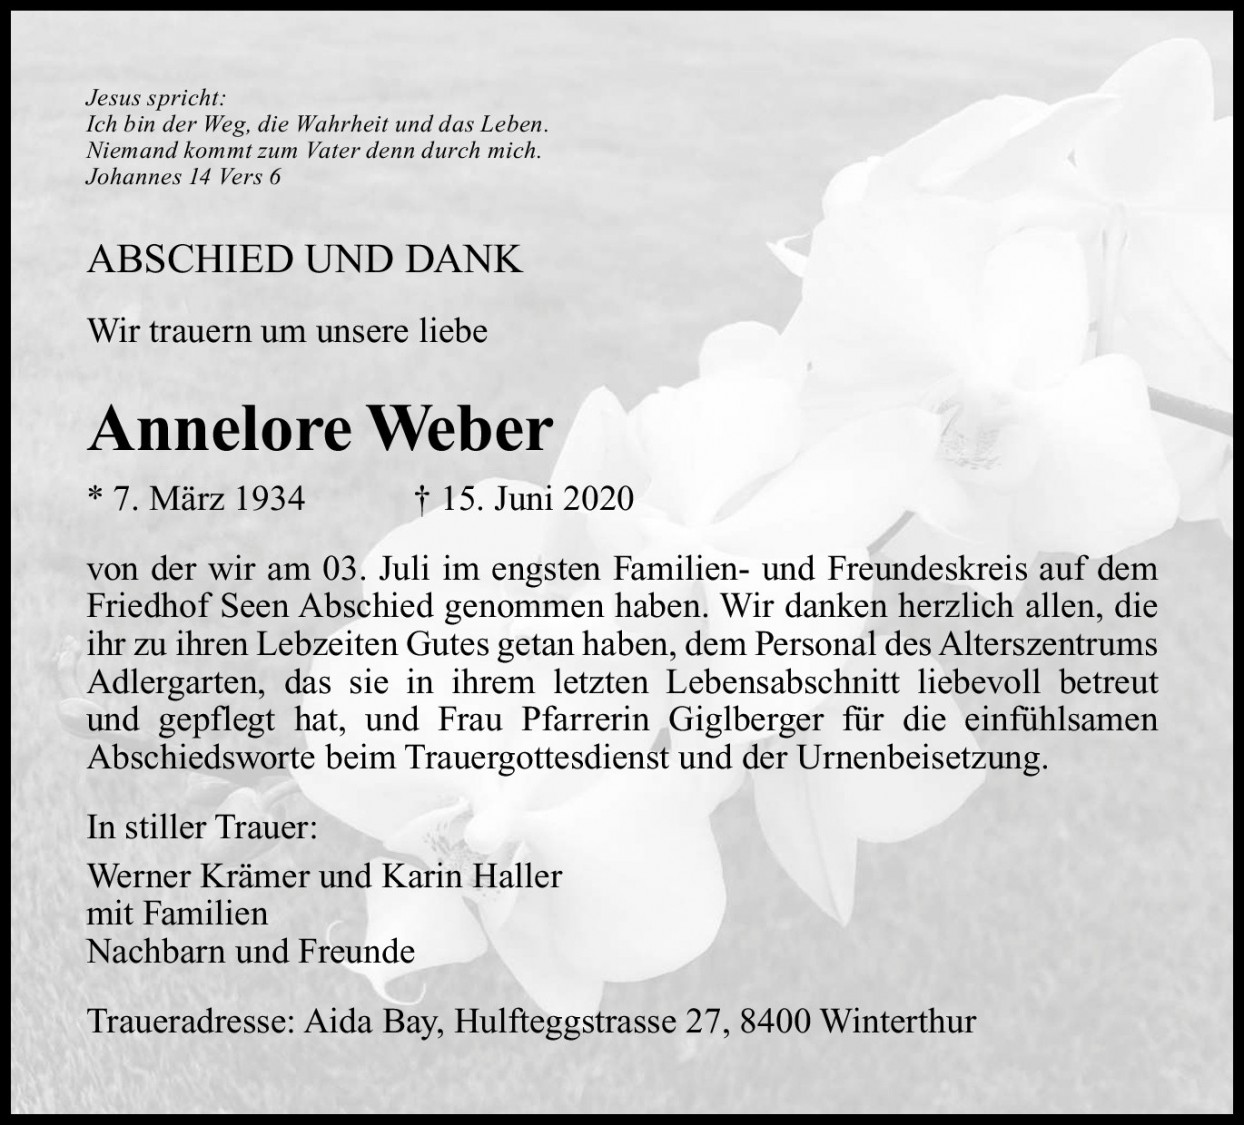 Annelore Weber